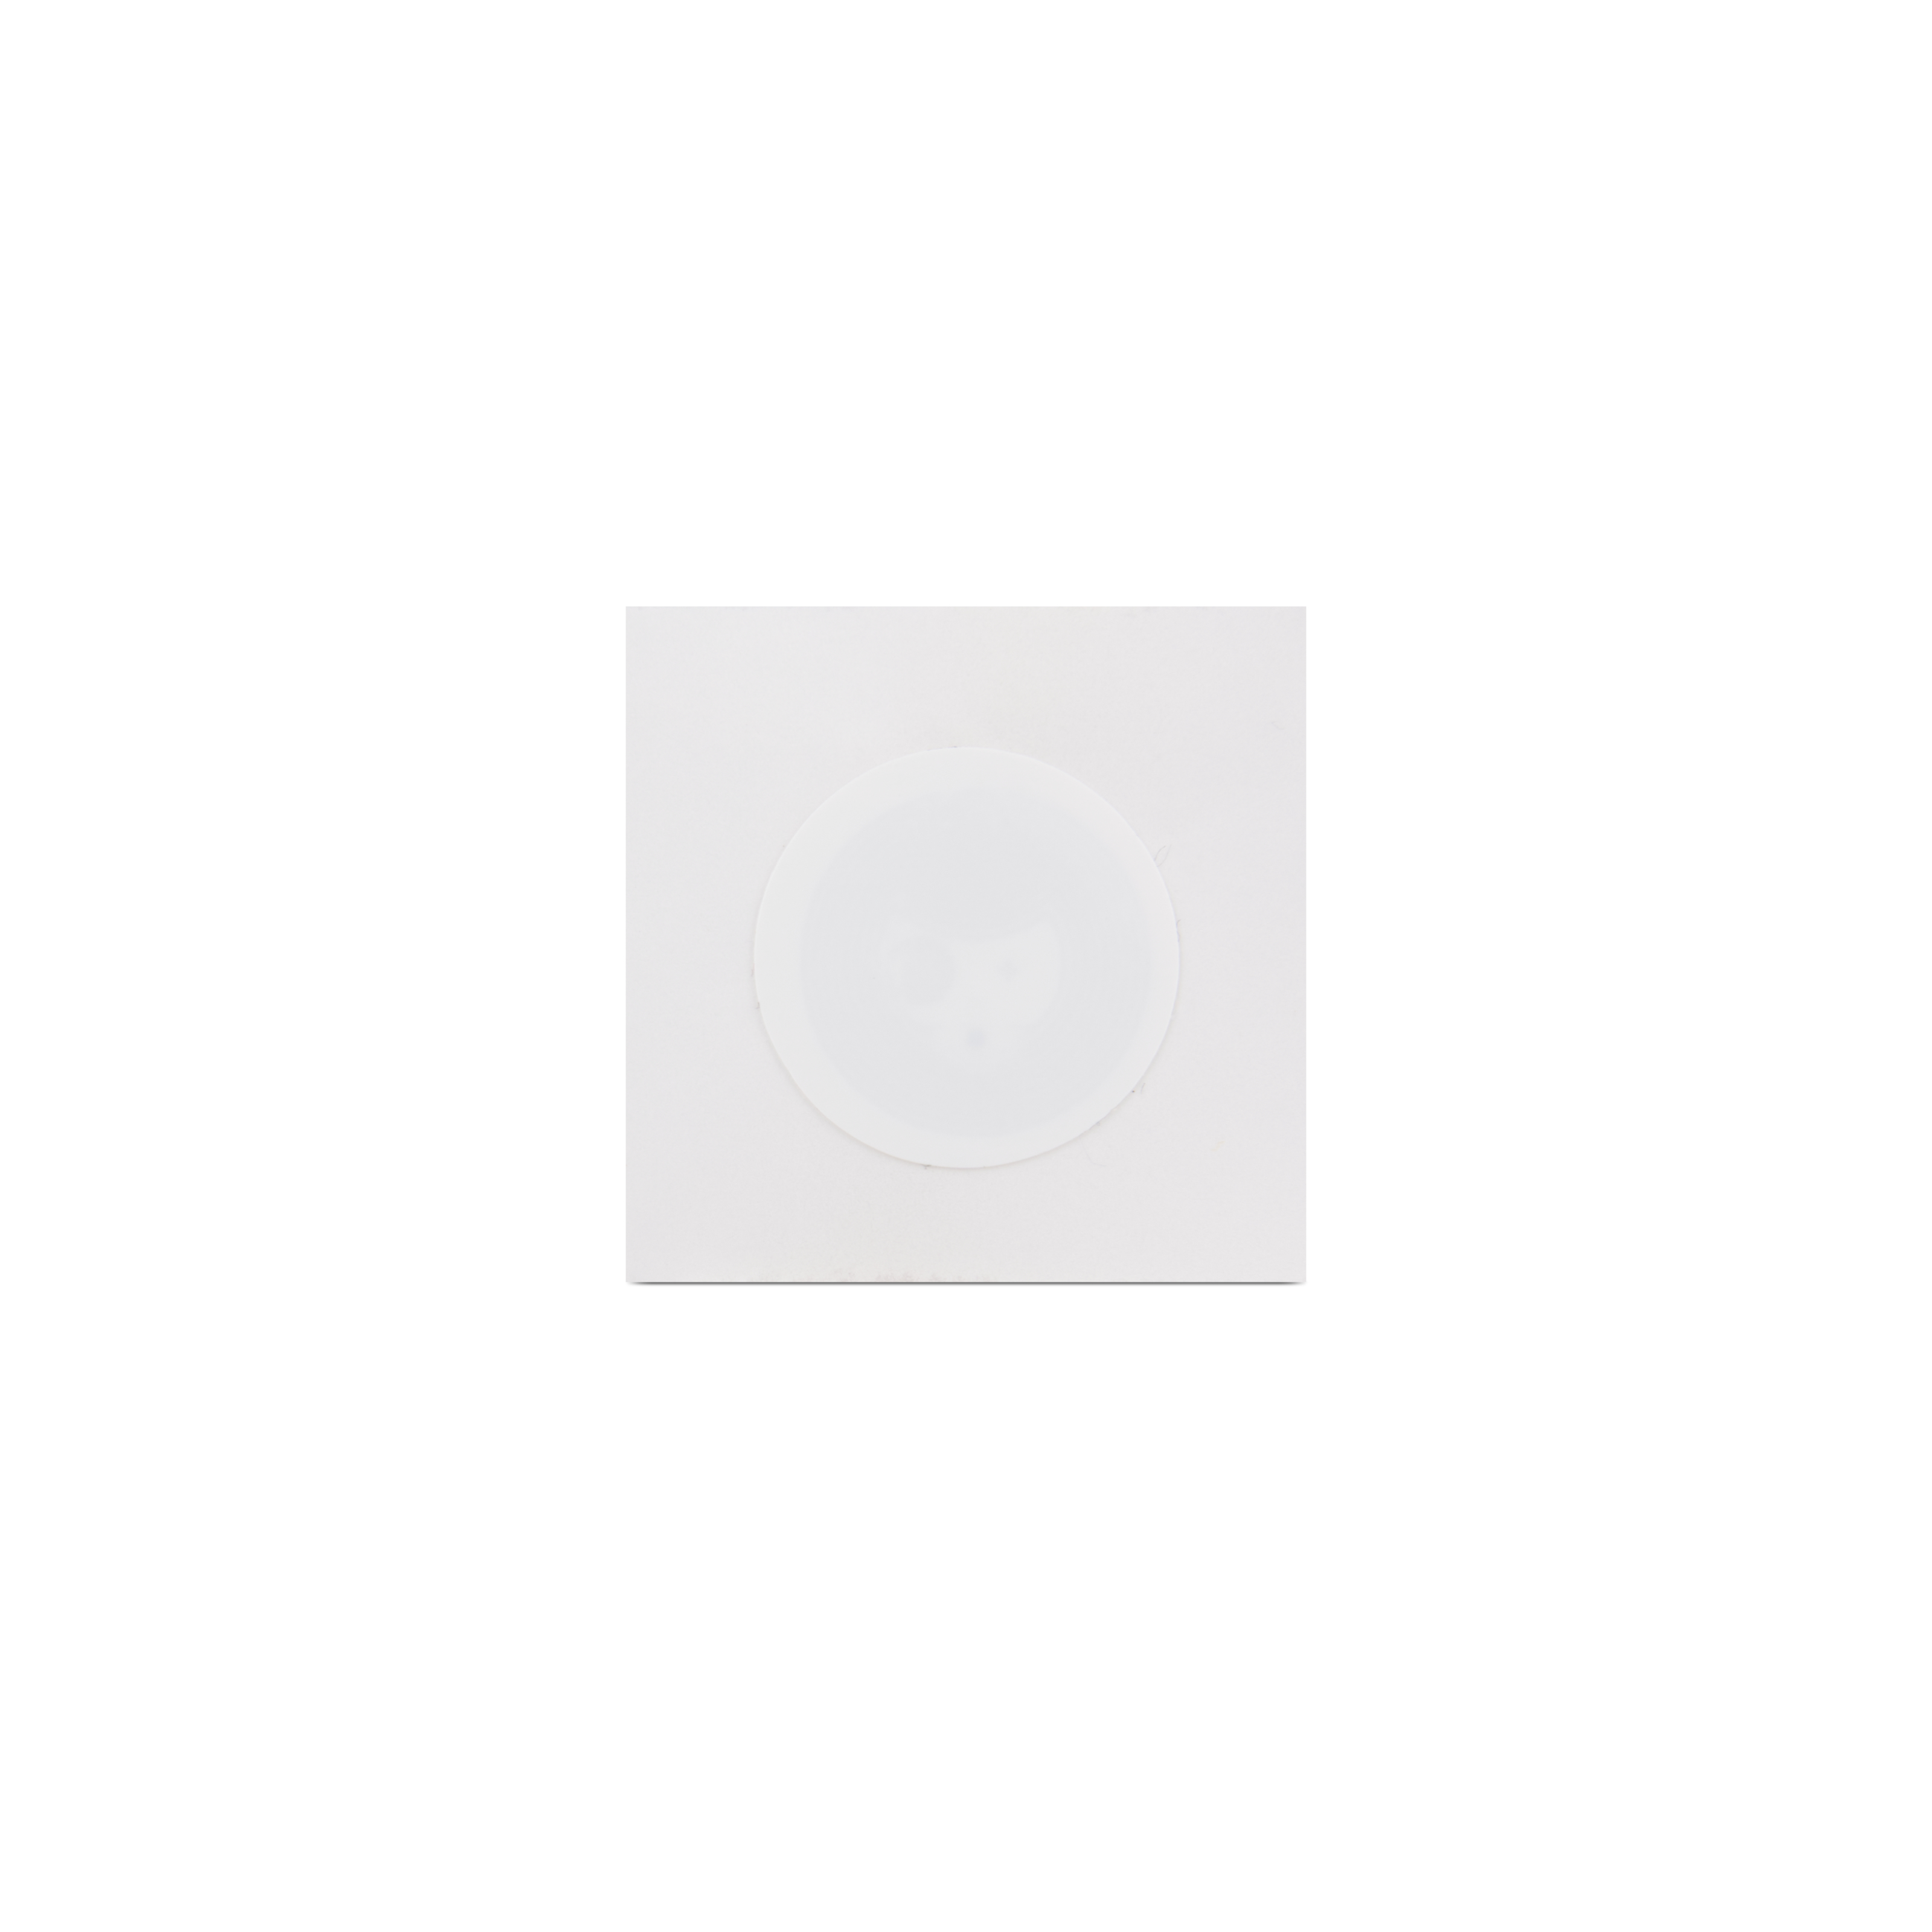 NFC Sticker PET - 18 mm - ICODE SLIX - 128 Byte - white